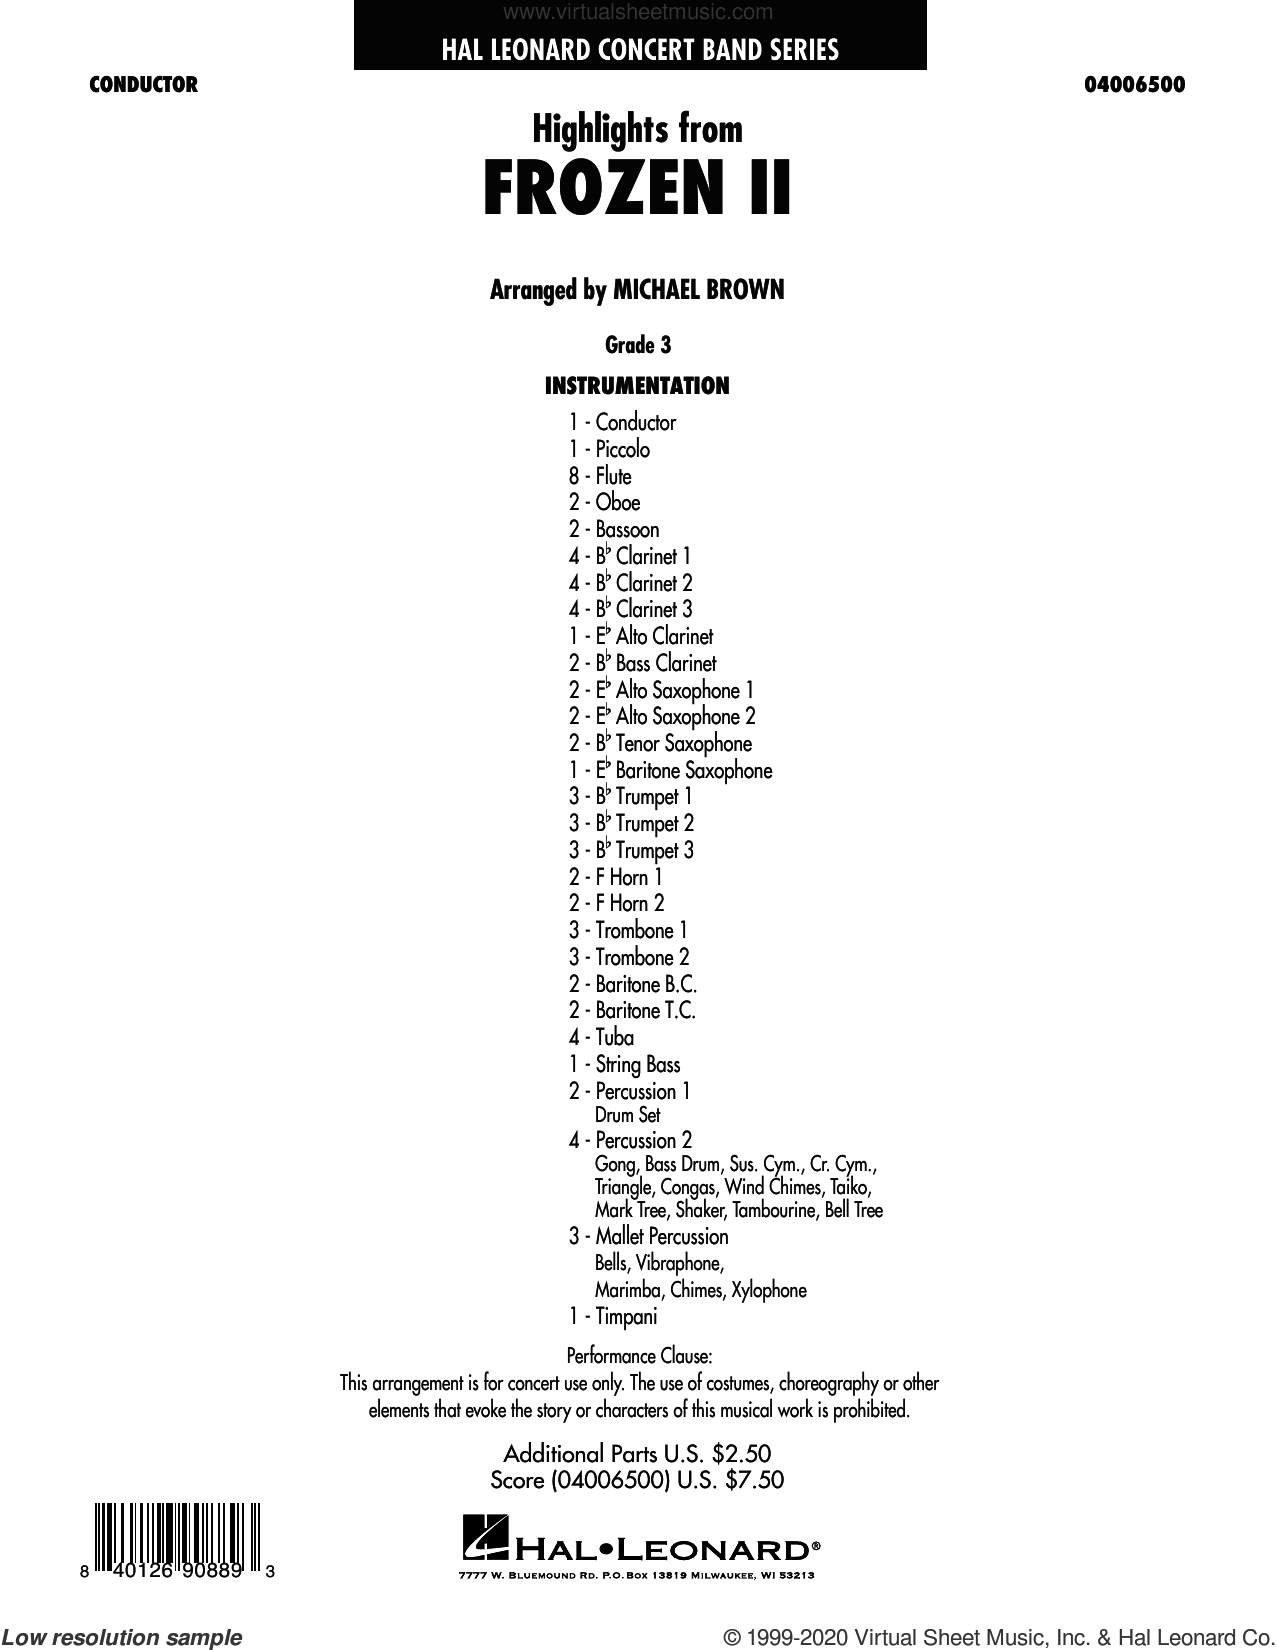 Do You Want to Build a Snowman? (from Frozen) (arr. Johnnie Vinson) - Eb  Alto Saxophone 1